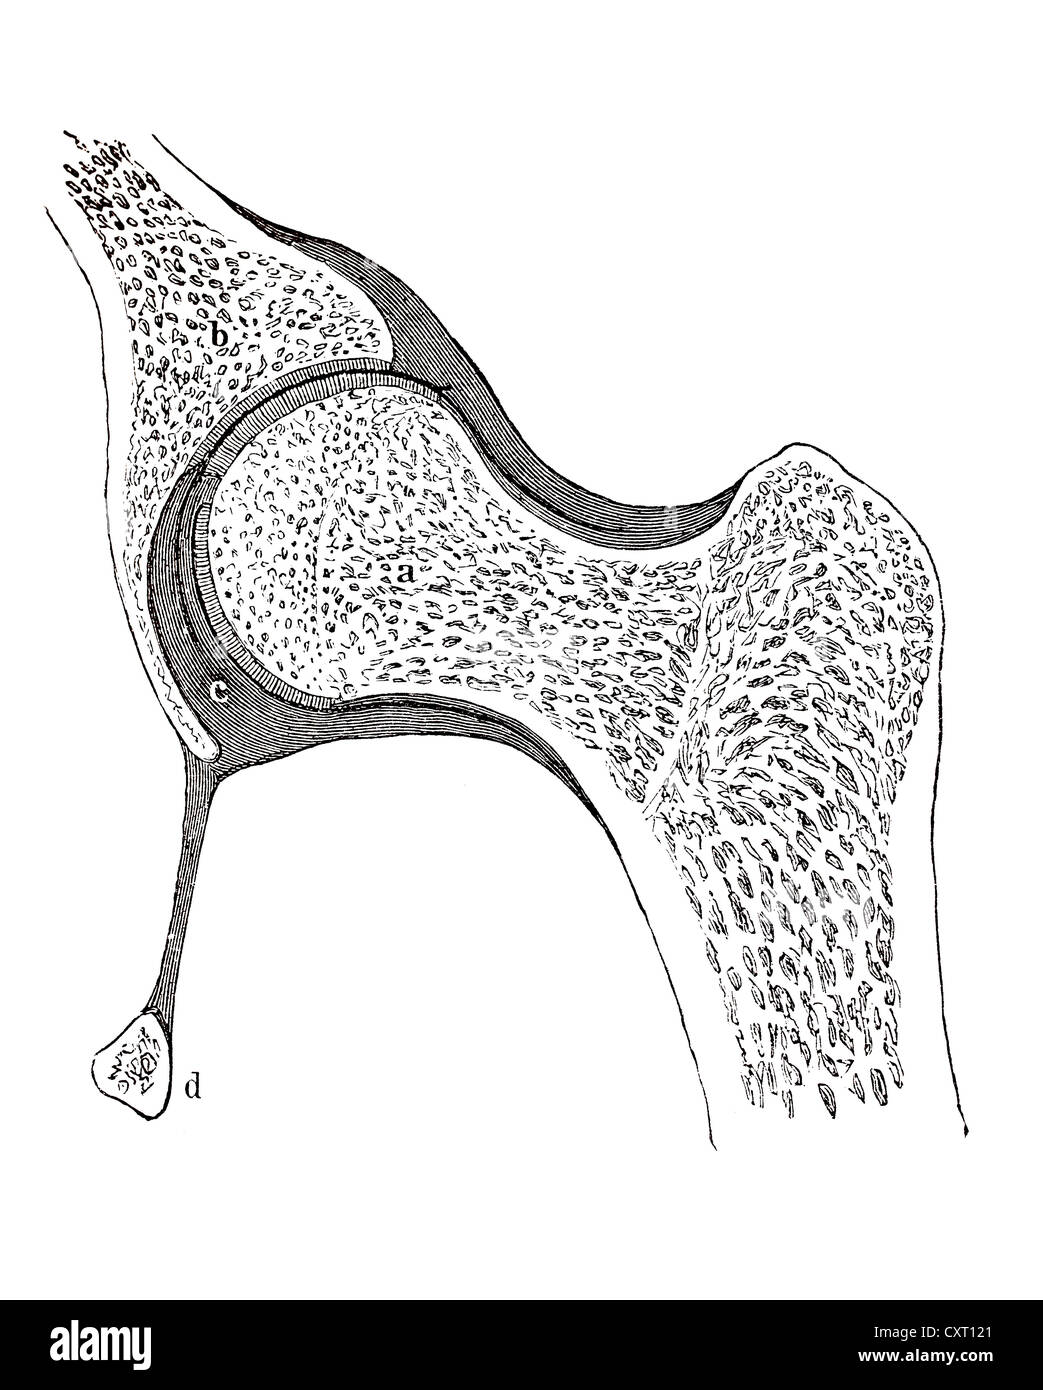 Human hip joint, anatomical illustration Stock Photo